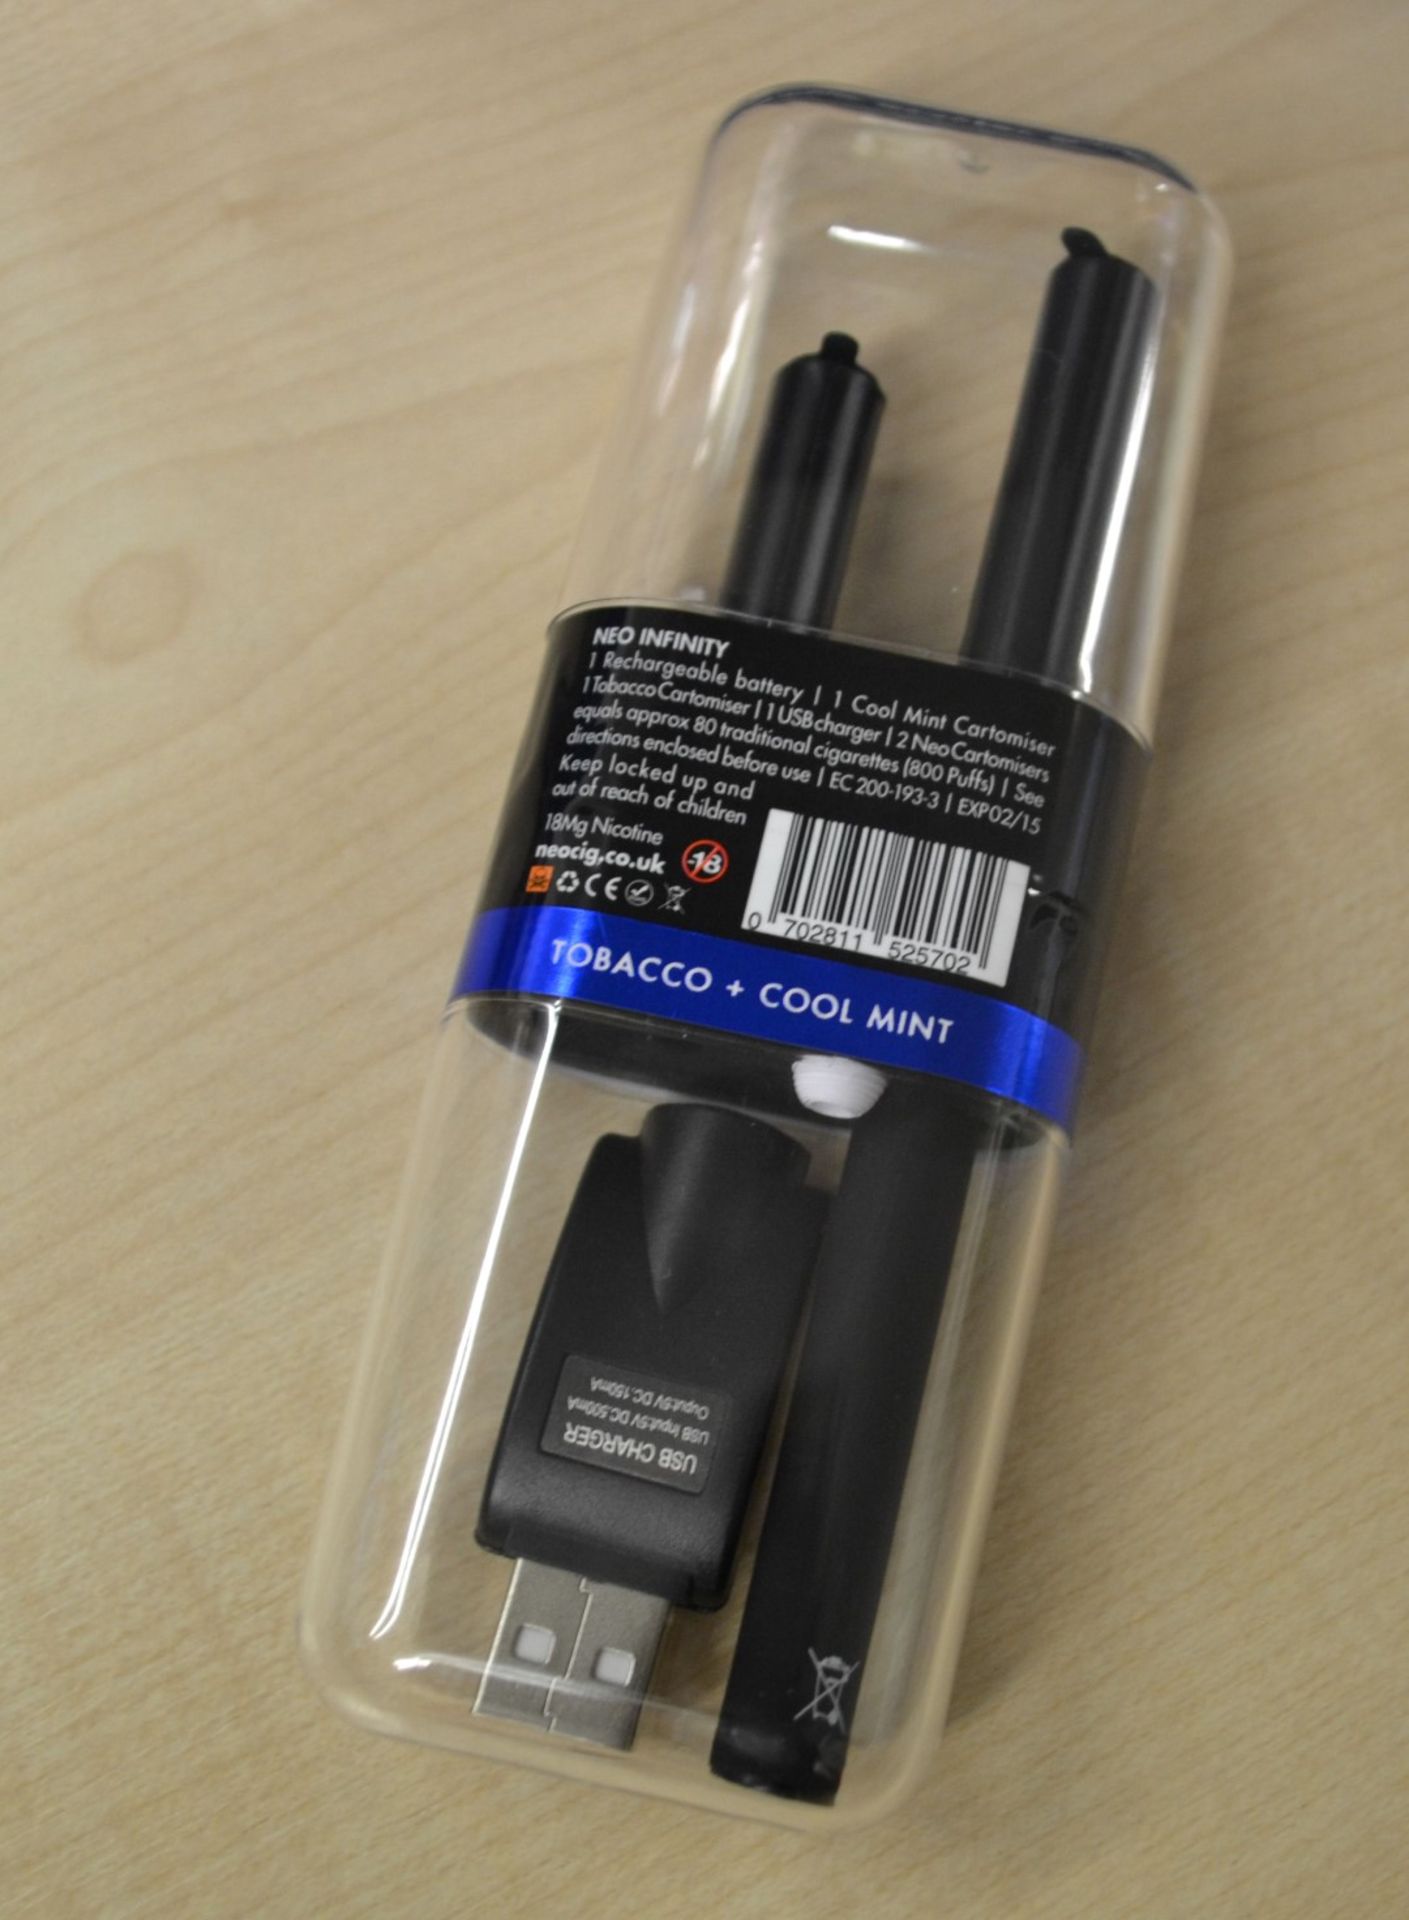 36 x Neo E-Cigarettes Infinity Starter Packs - New & Sealed Stock - CL185 - Ref: DRTISP - Location: - Image 7 of 7